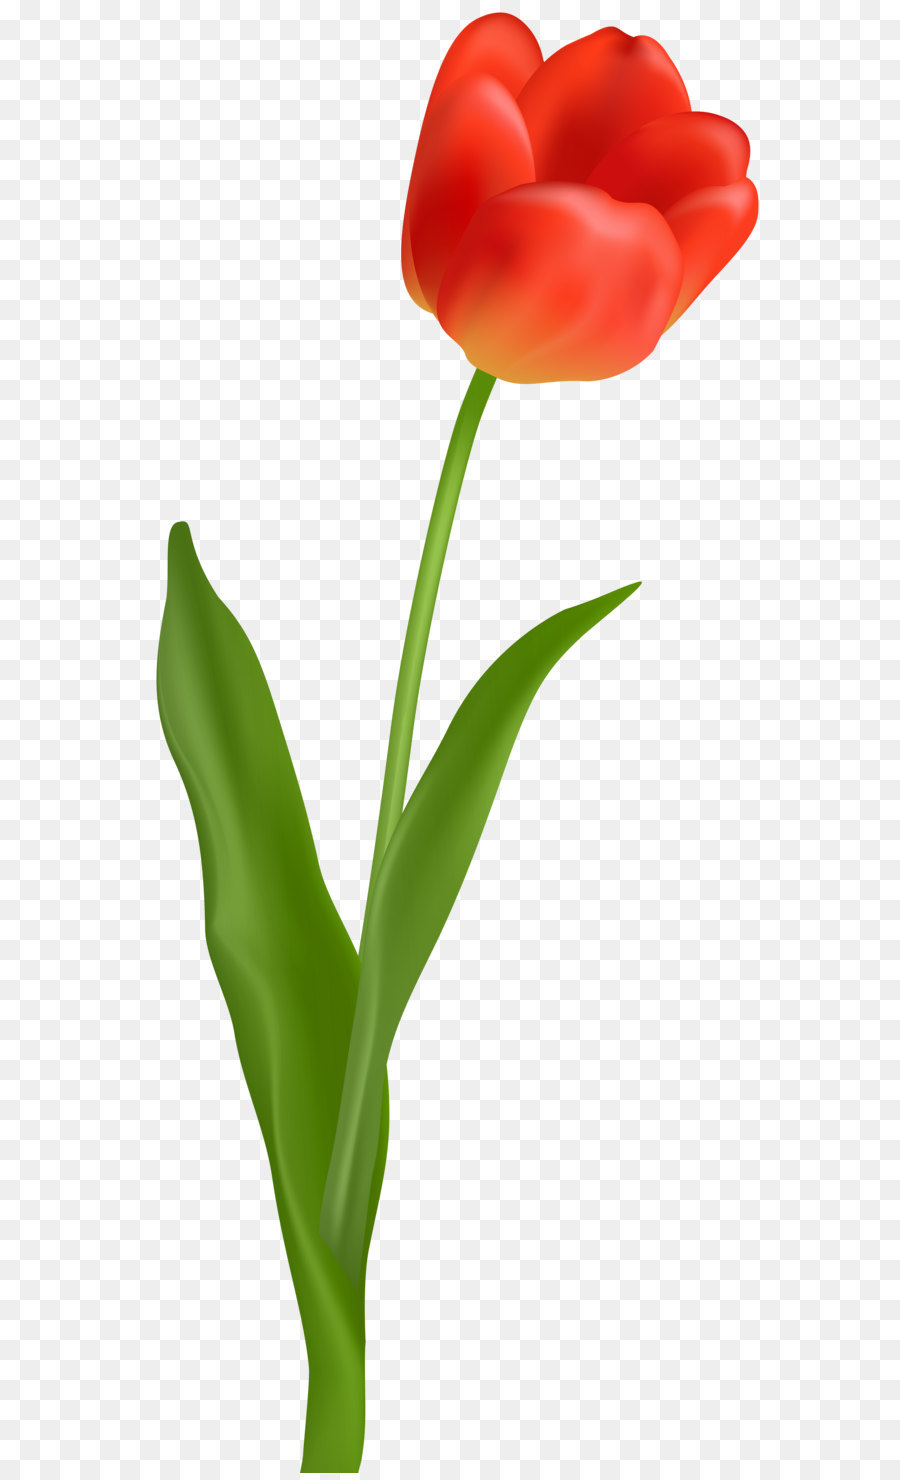 Tulip Red Flower Clip art - Red Tulip Transparent PNG Clip Art Image png download - 3531*8000 - Free Transparent Tulip png Download.